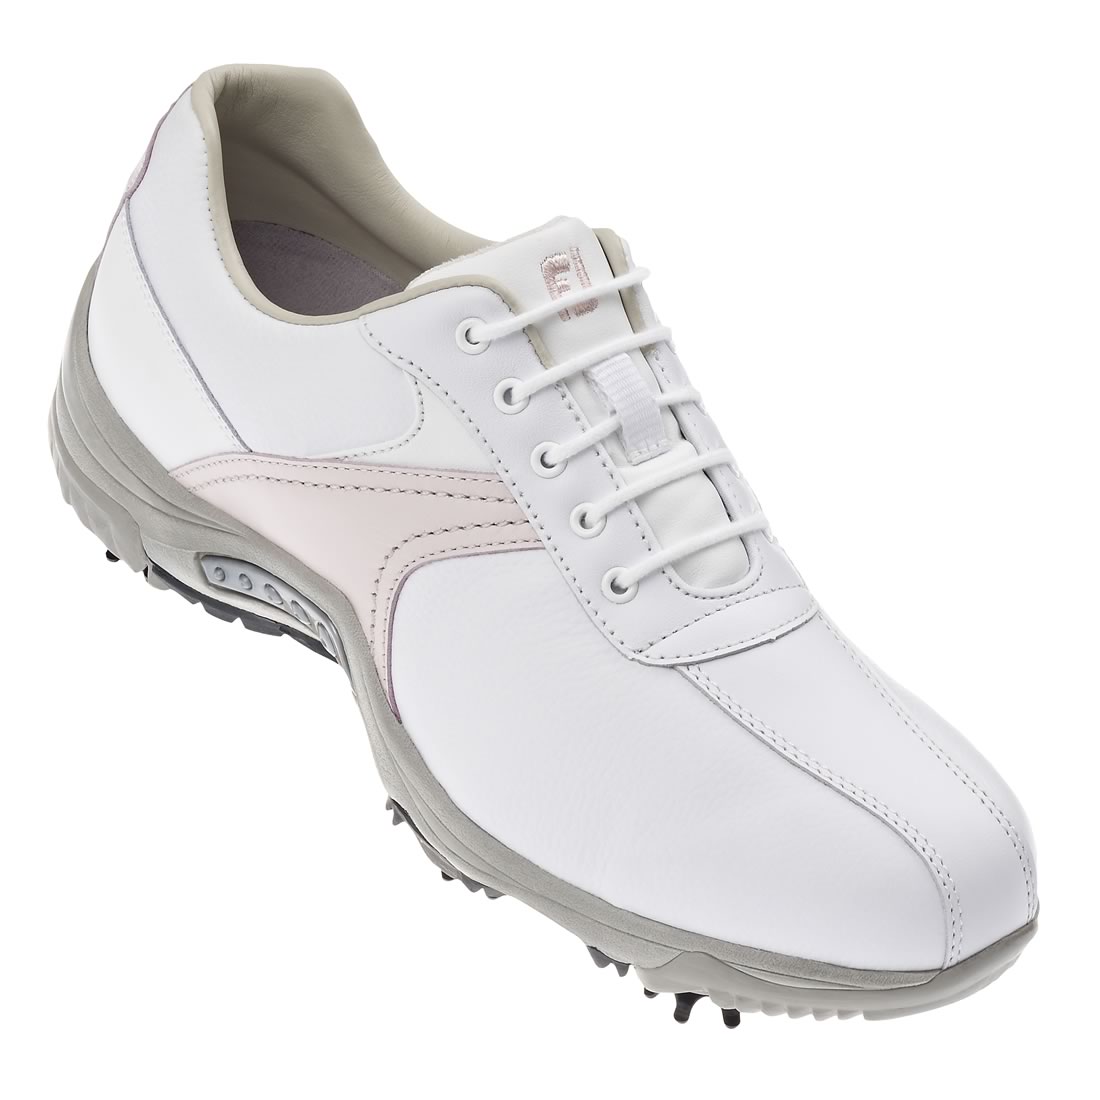 Ladies Contour Golf Shoes White/Pink